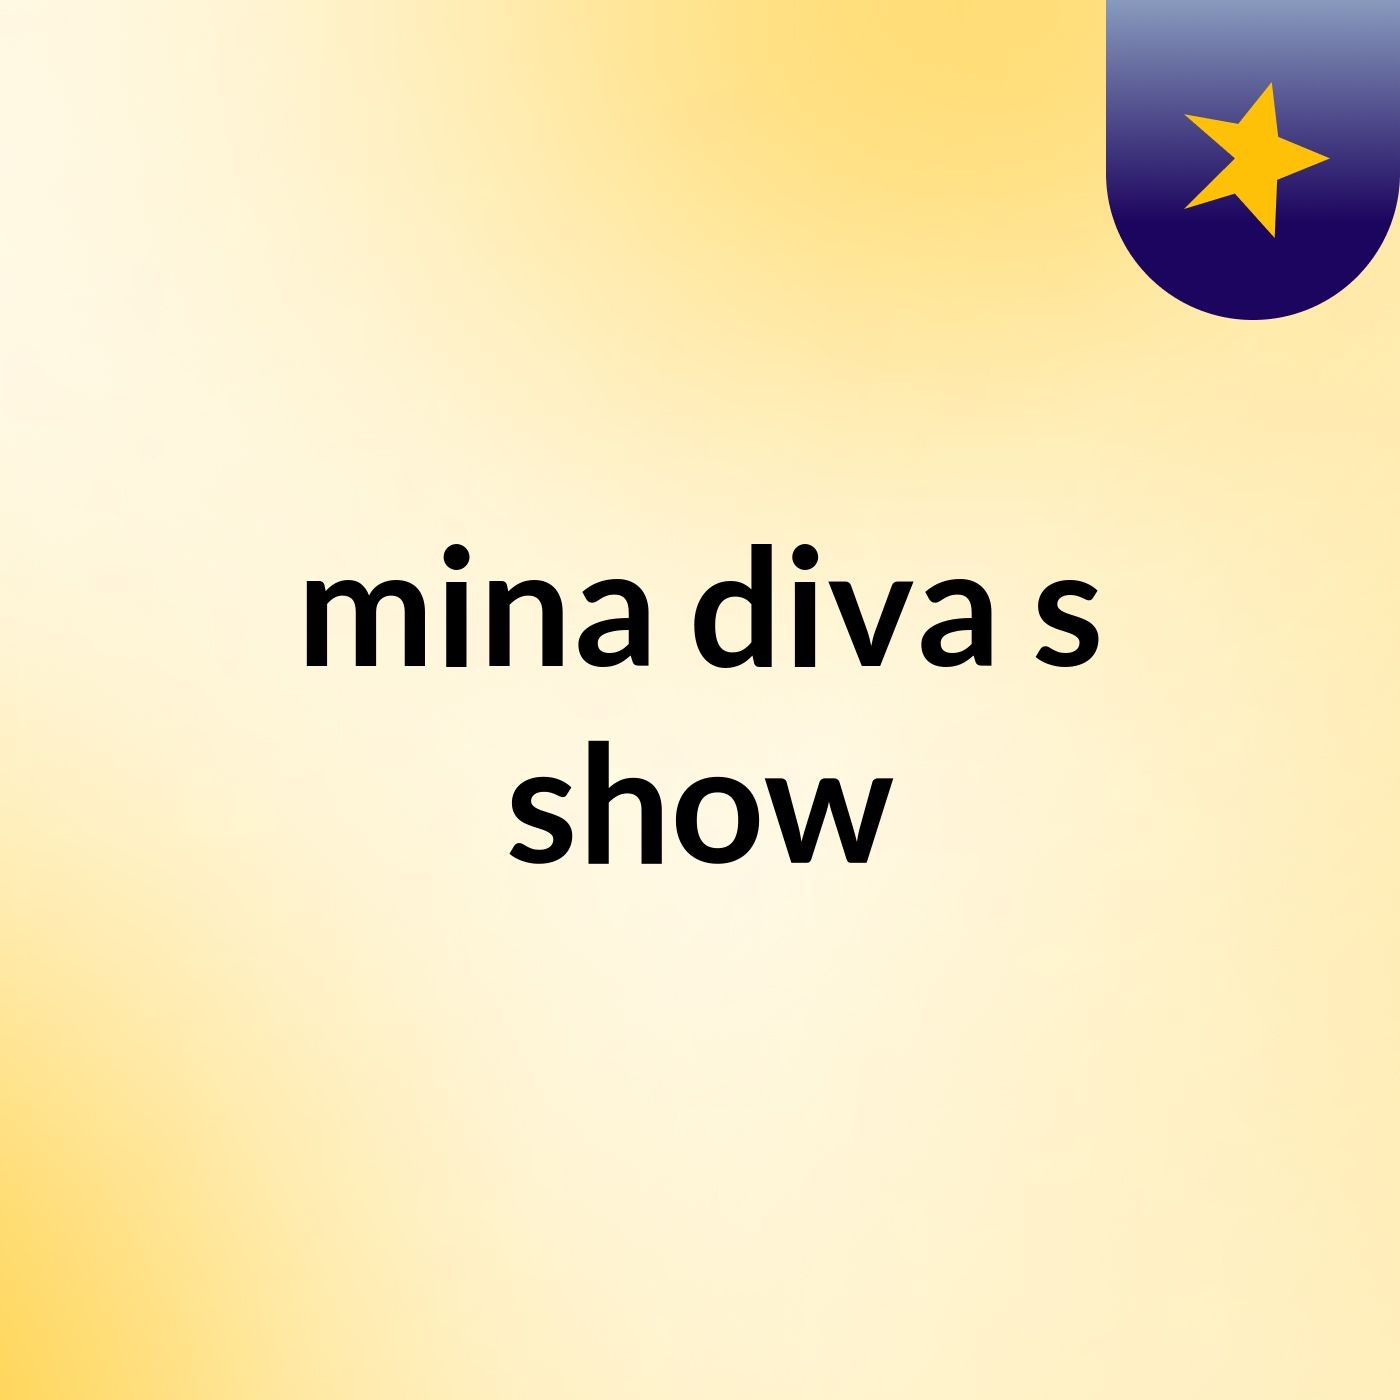 mina diva's show